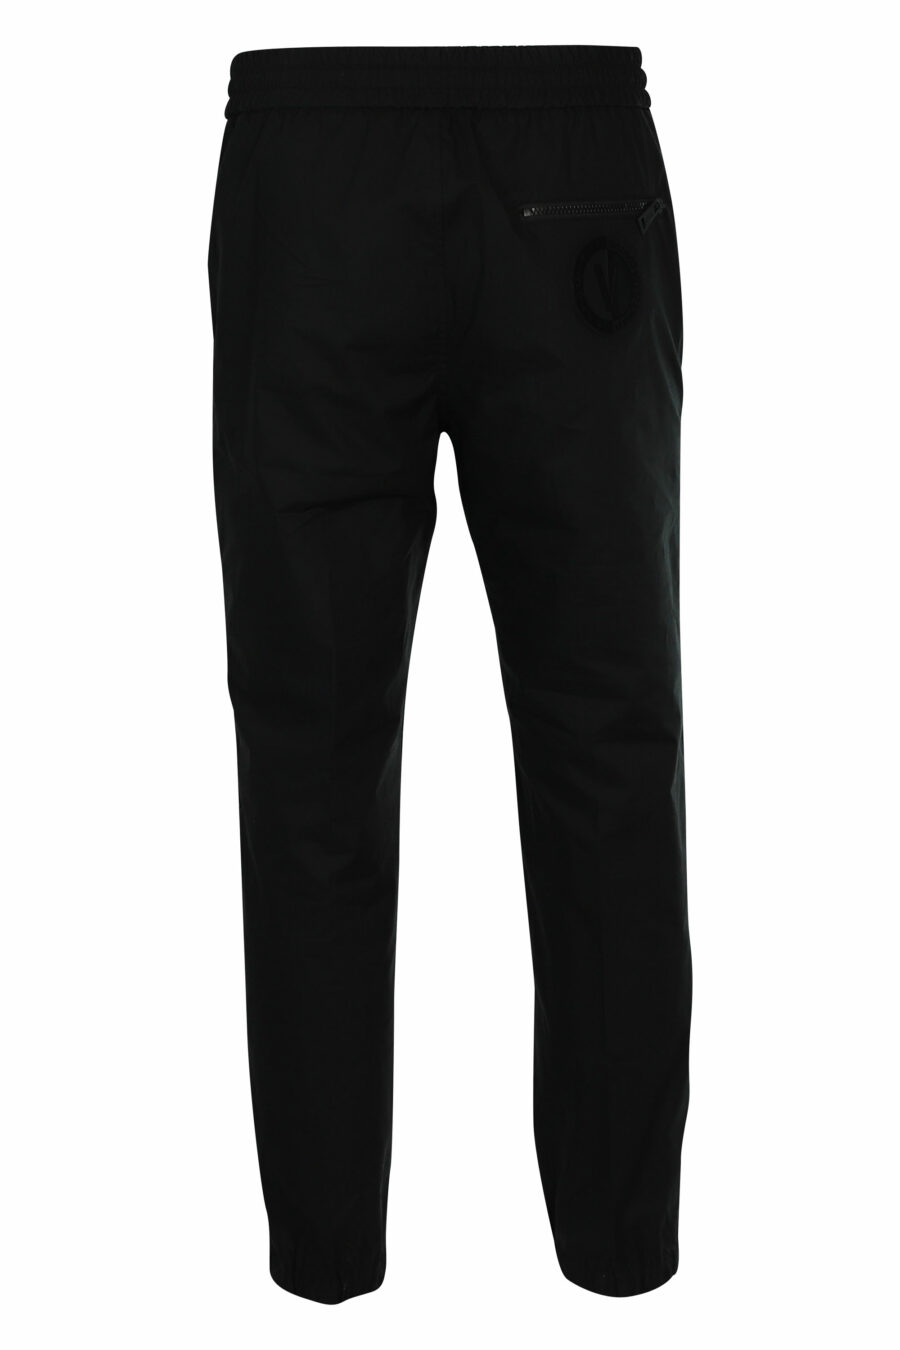 Pantalon de pêche noir avec logo - 8052019219876 3